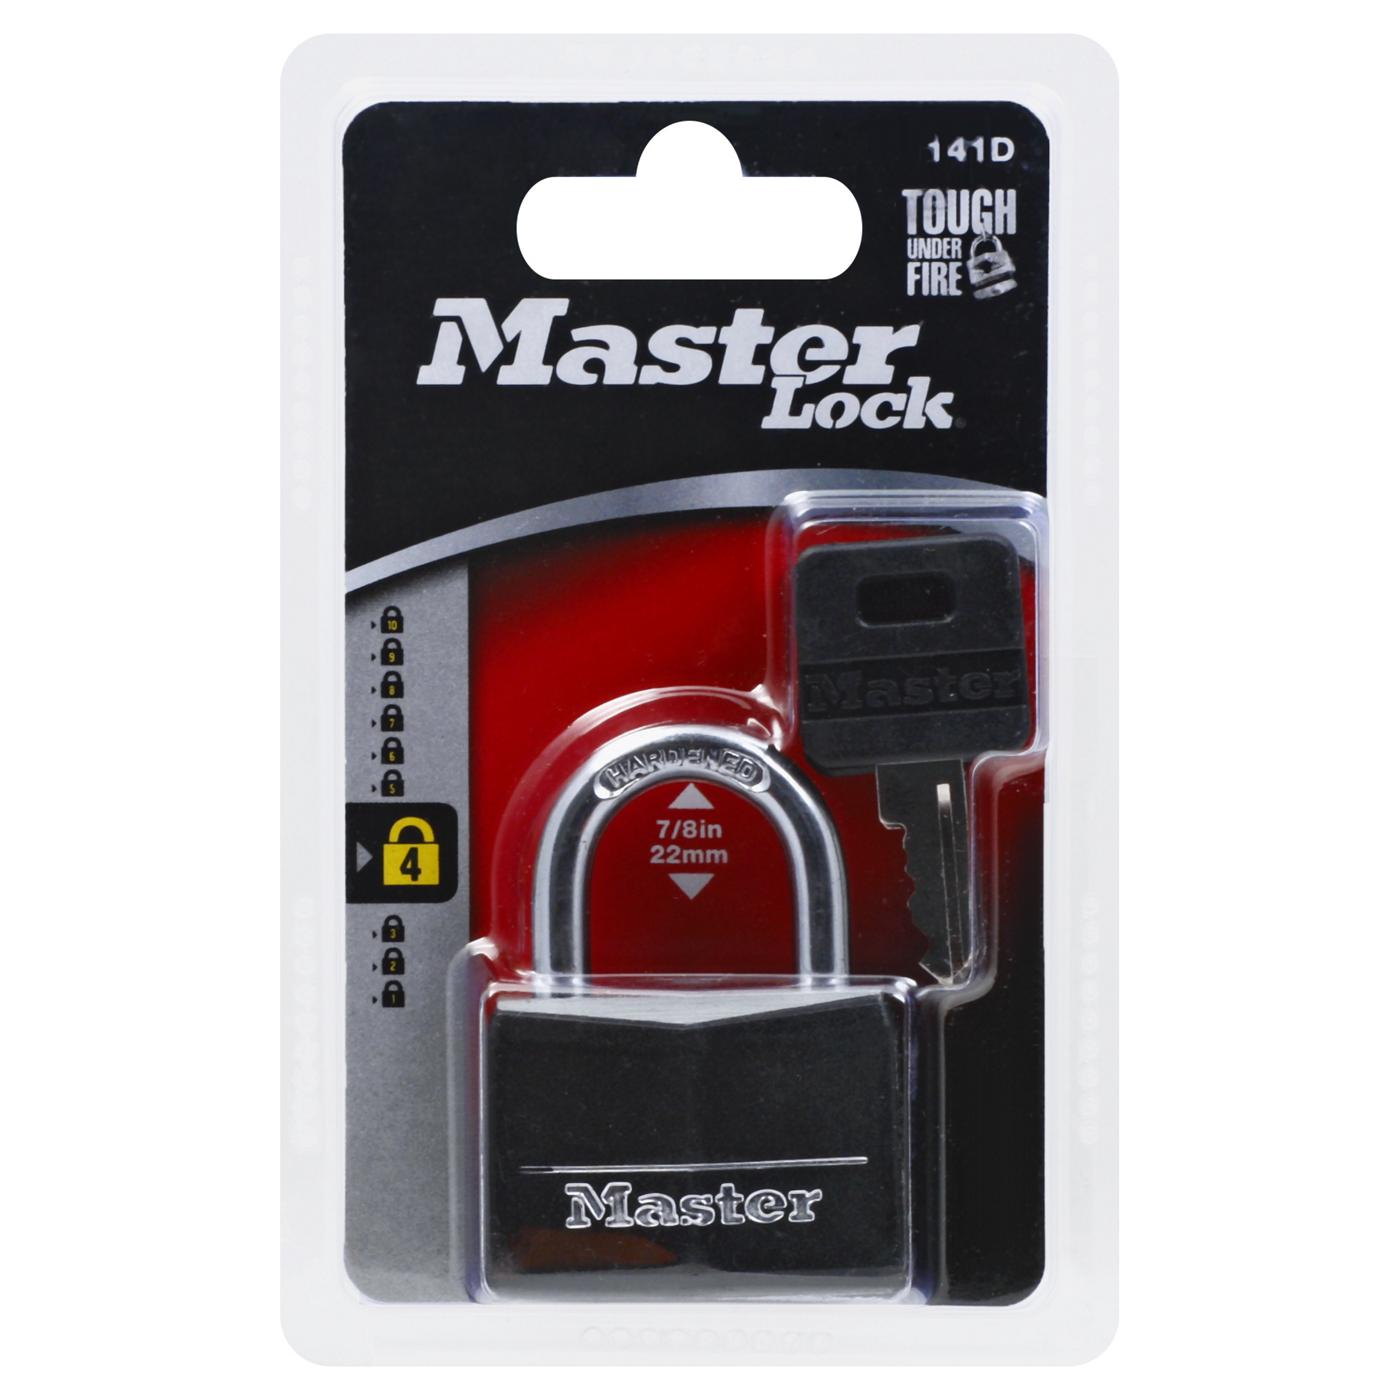 Master Lock 141D Solid Body Padlock - Black; image 1 of 2